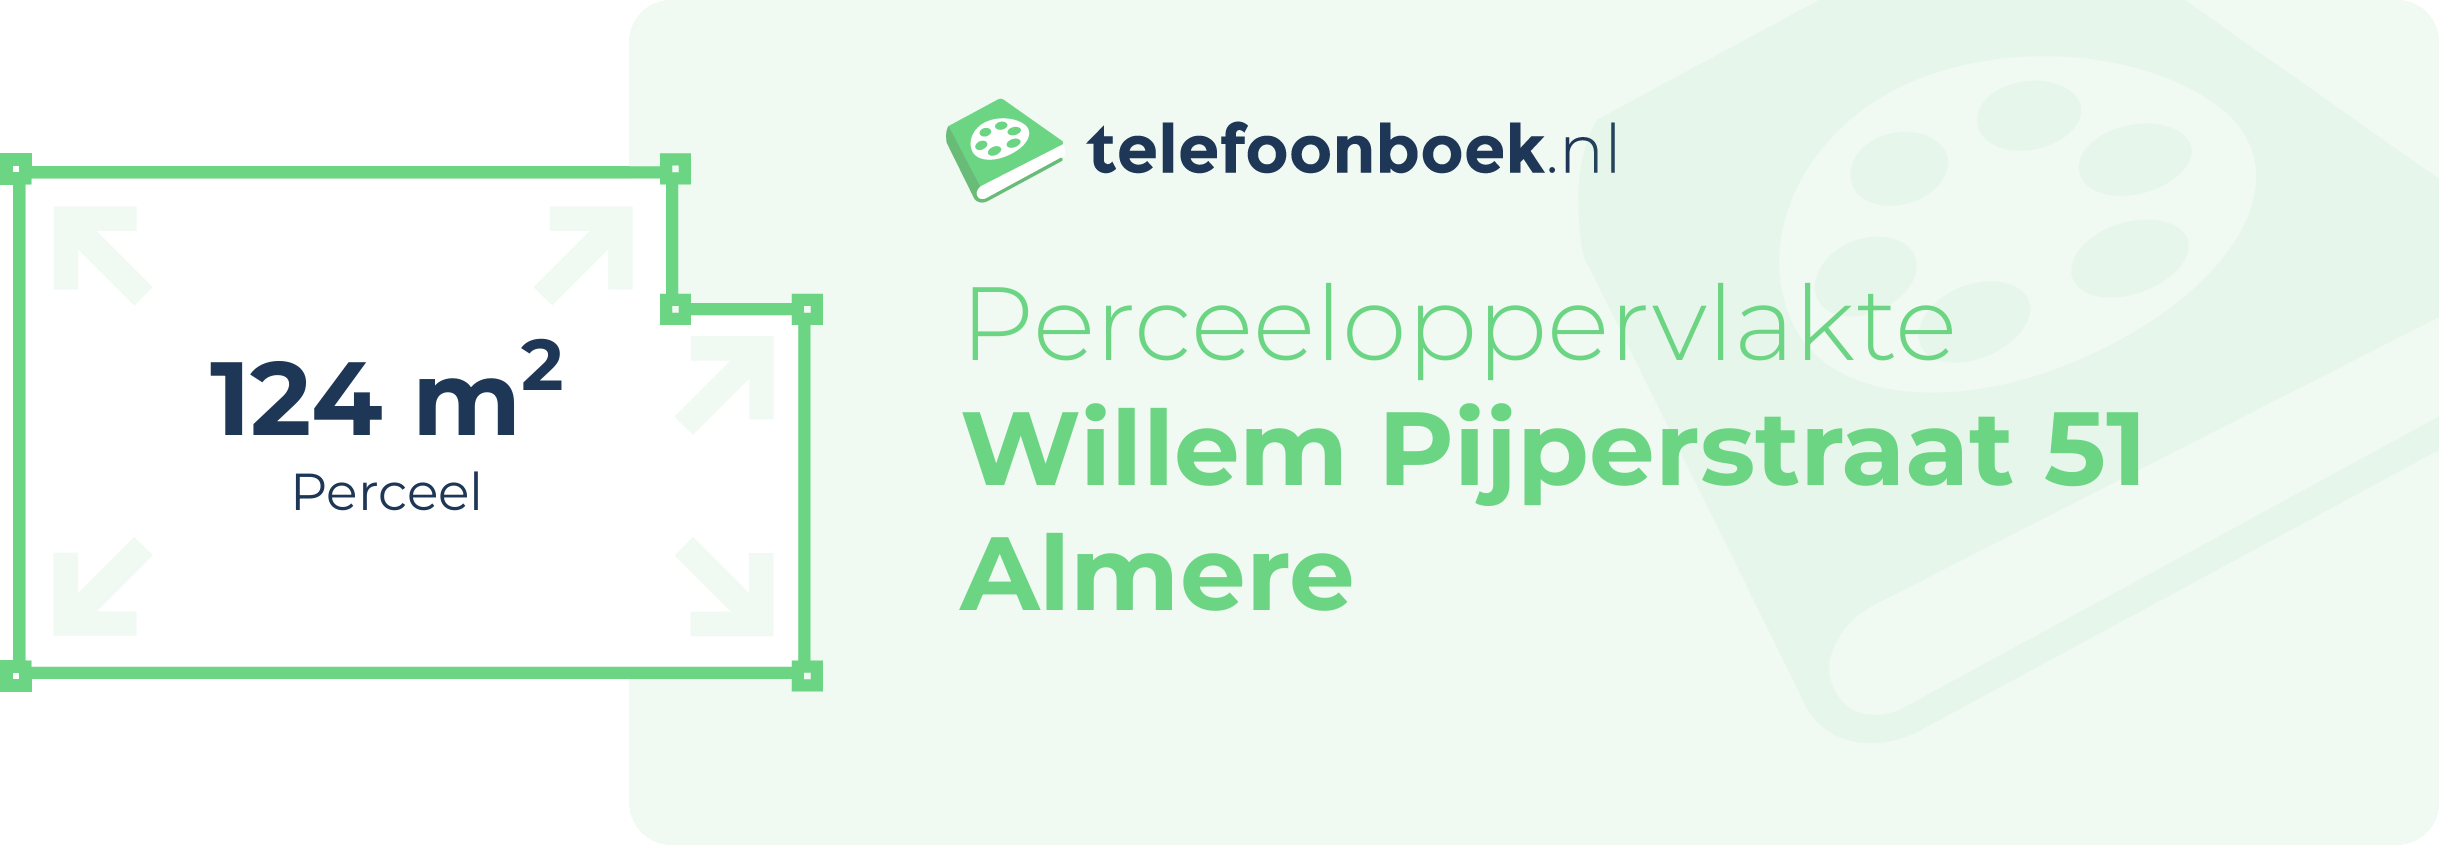 Perceeloppervlakte Willem Pijperstraat 51 Almere